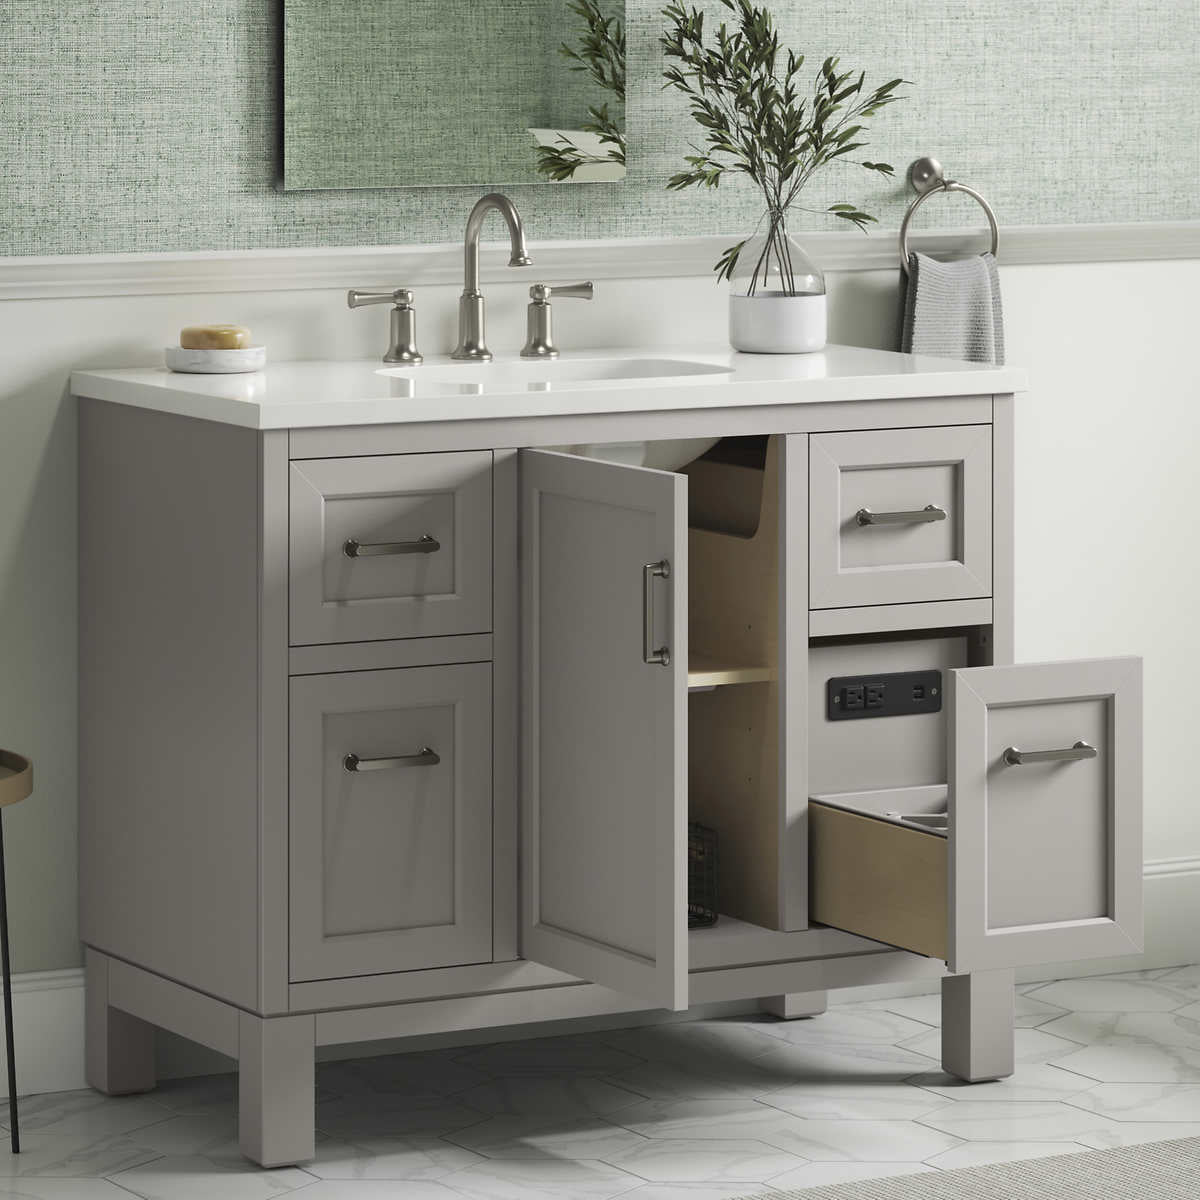 NEW - Costco - Kohler Tellin 42" Bath Vanity in Gray - Retail $1399